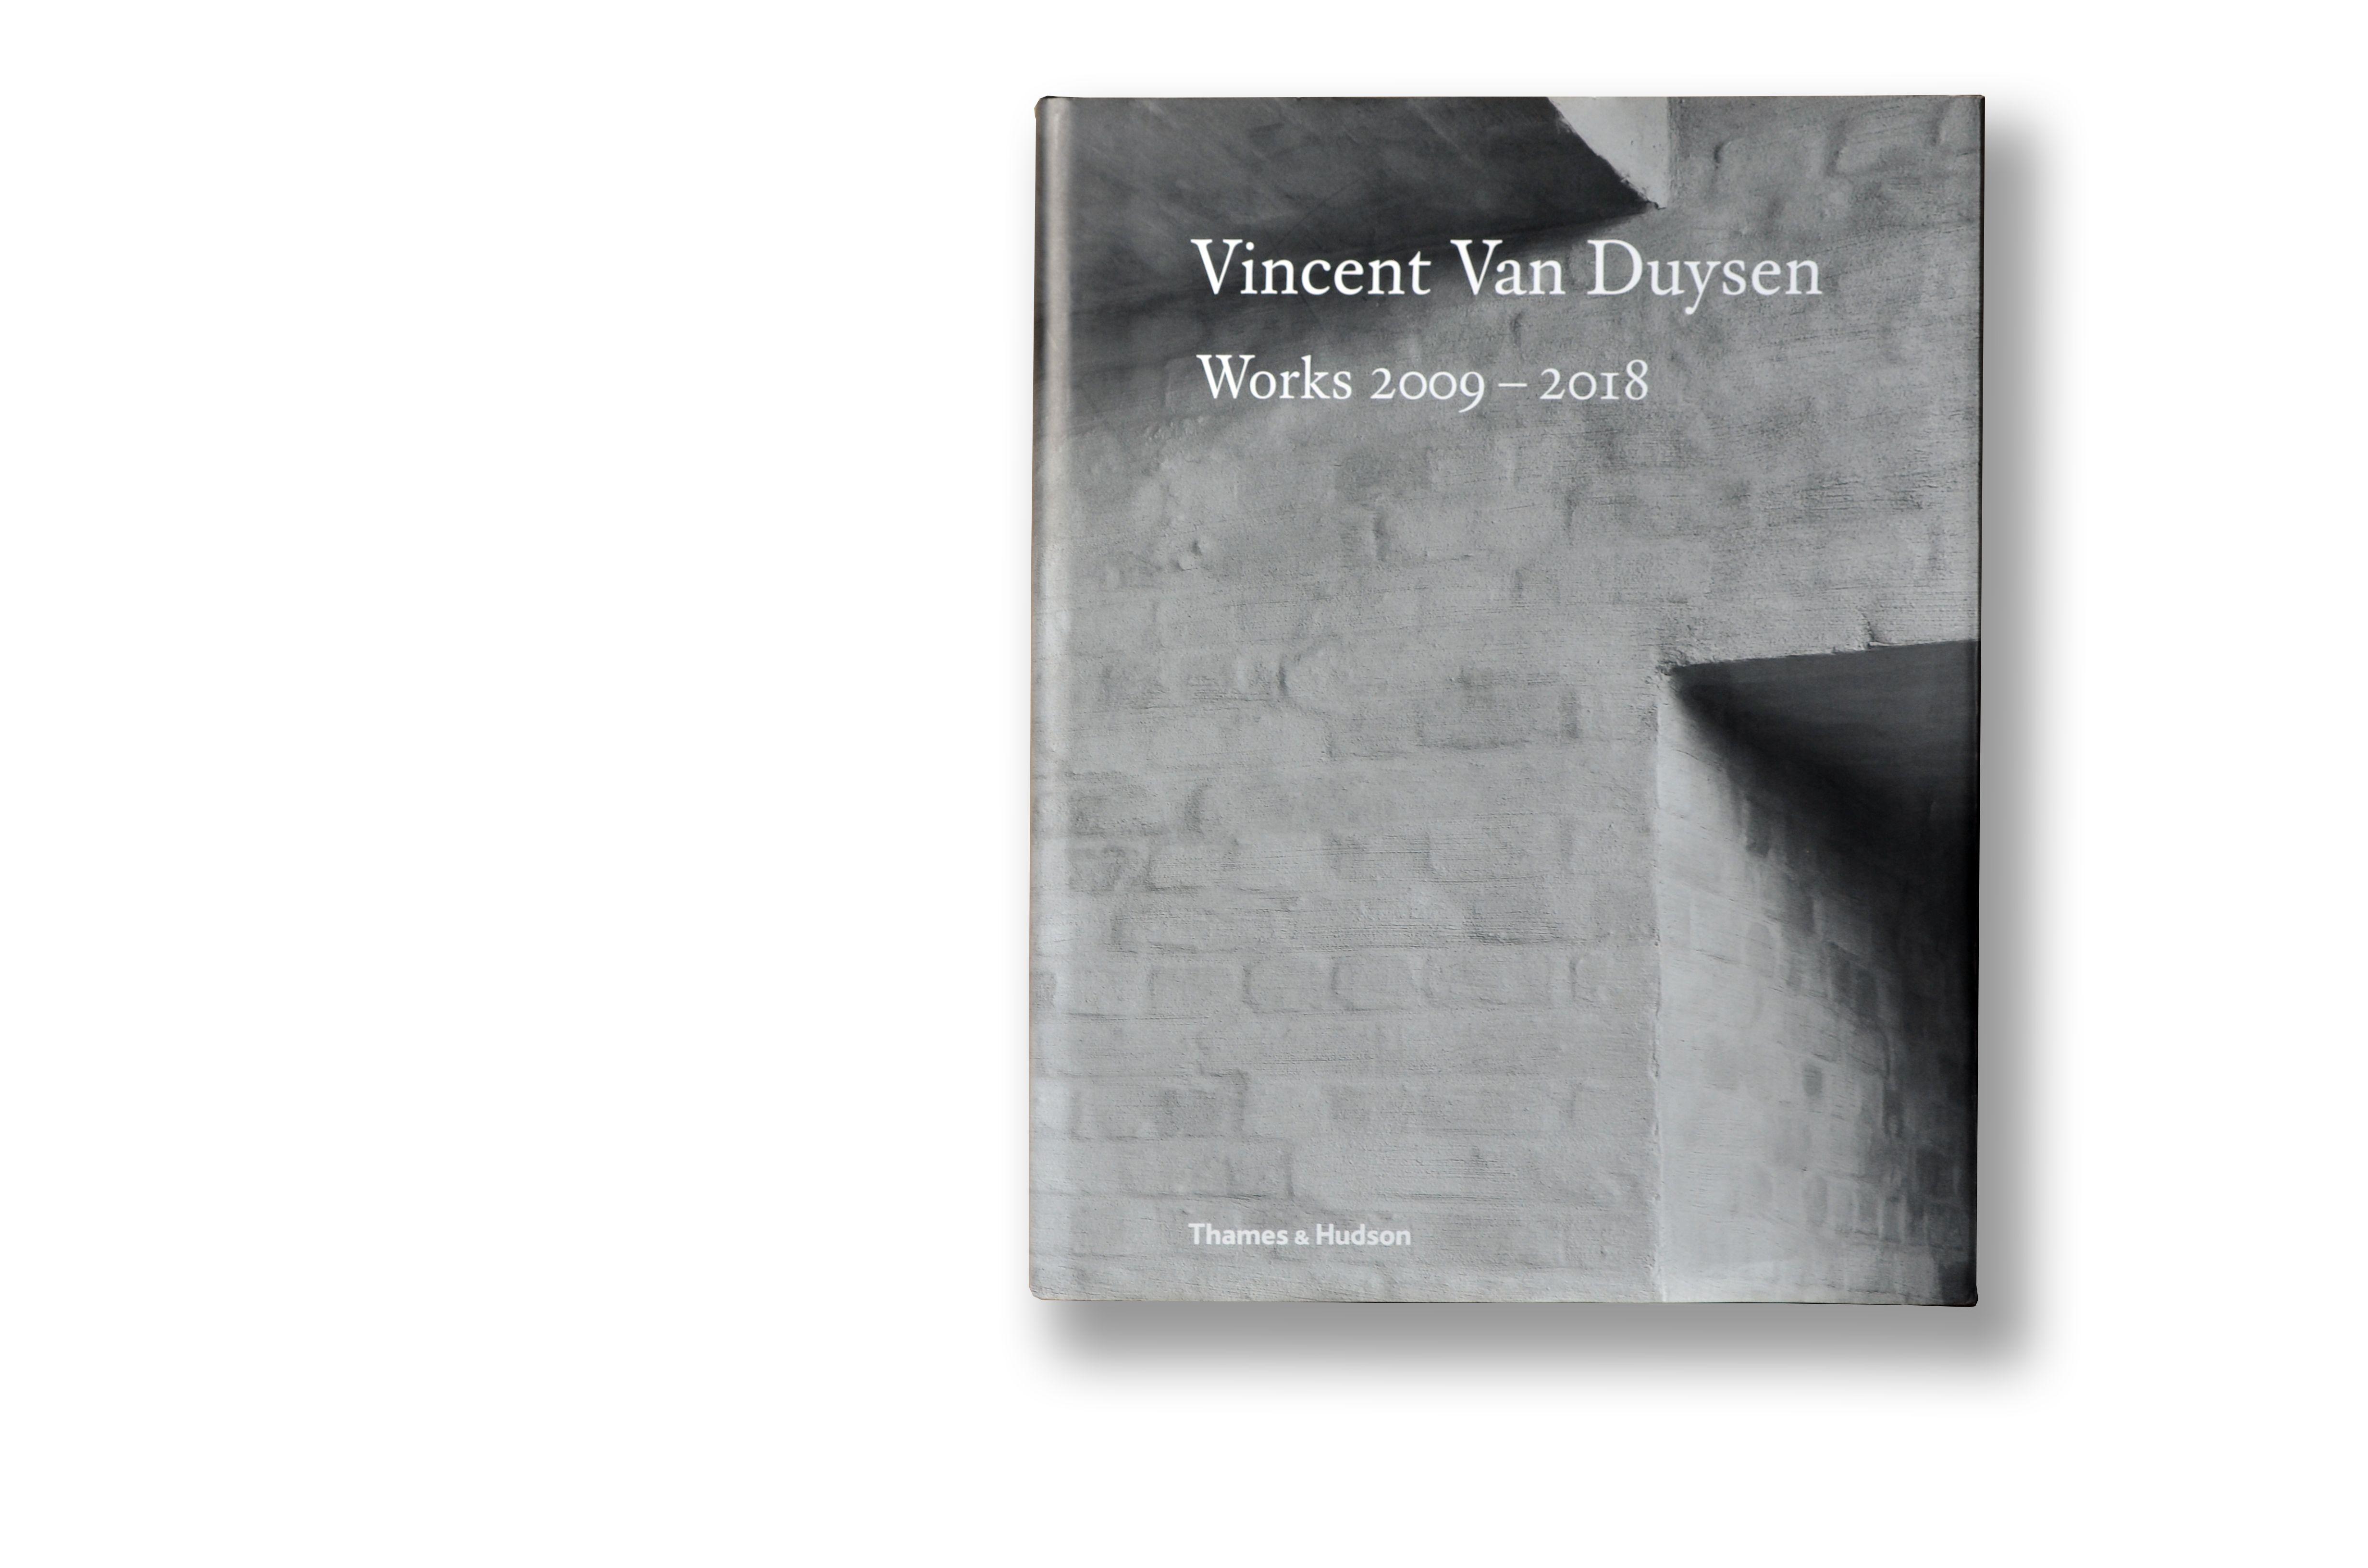 Vincent Van Duysen Works 2009-2018, a coffee table book dedicated